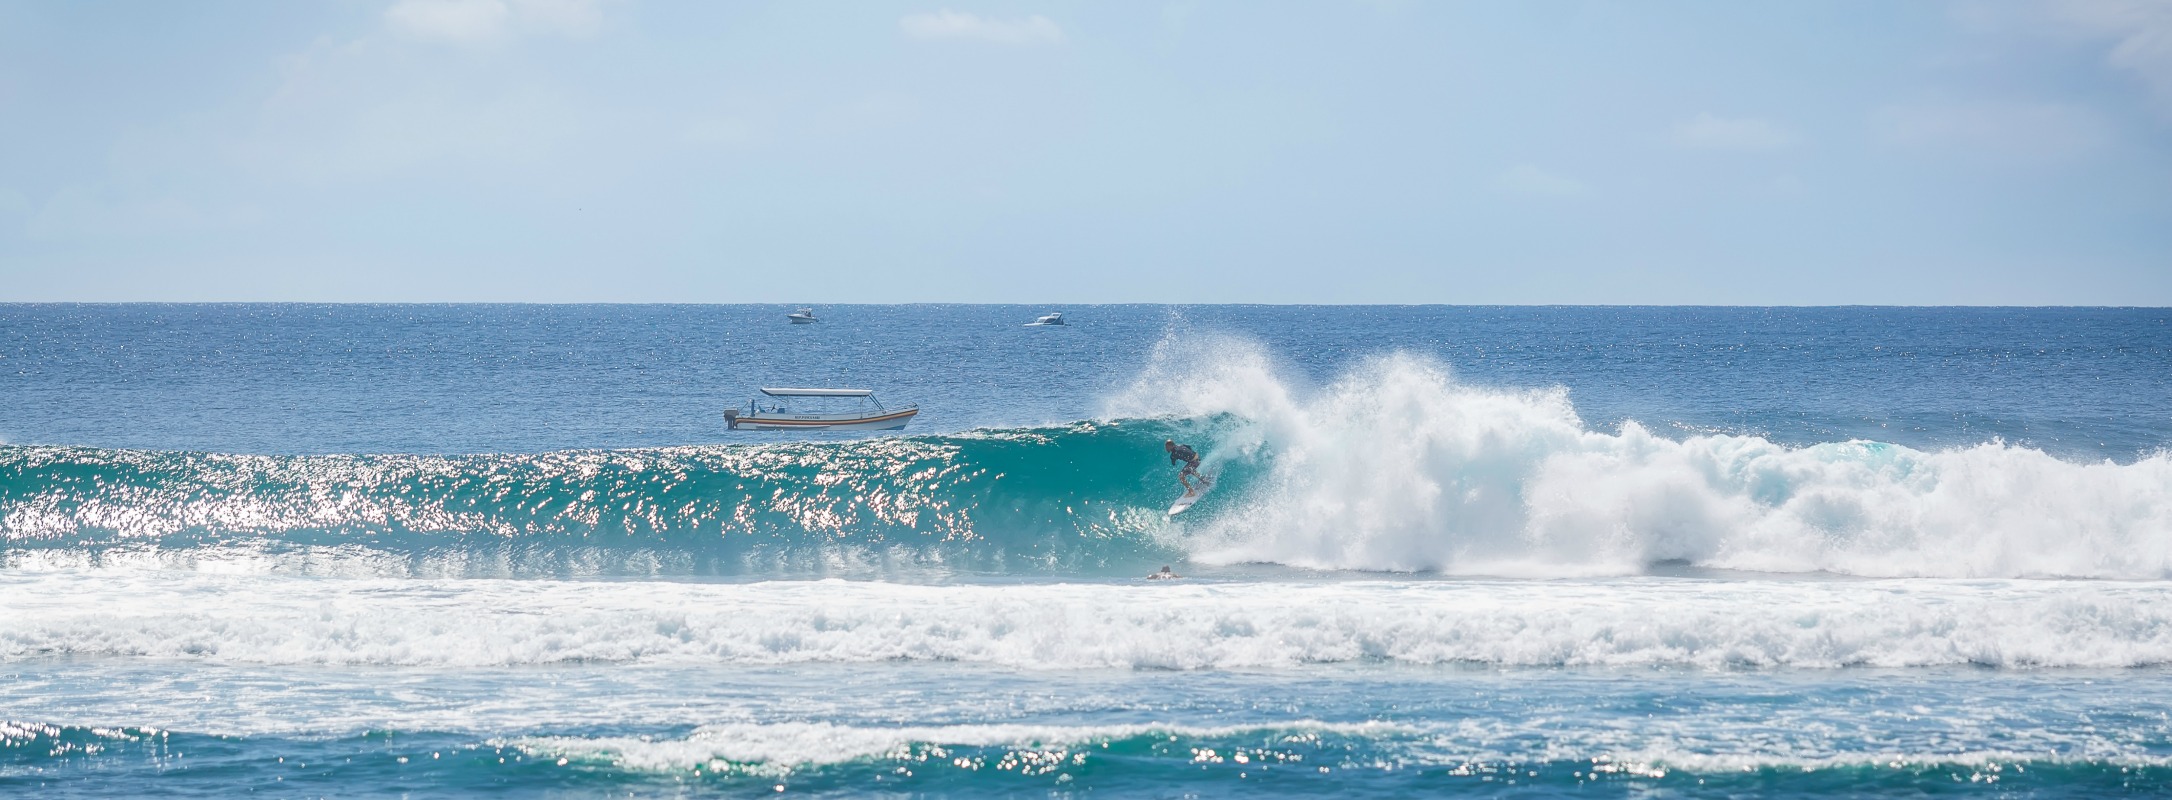  Serangan  Surf Spot Bali  Surf Indonesia